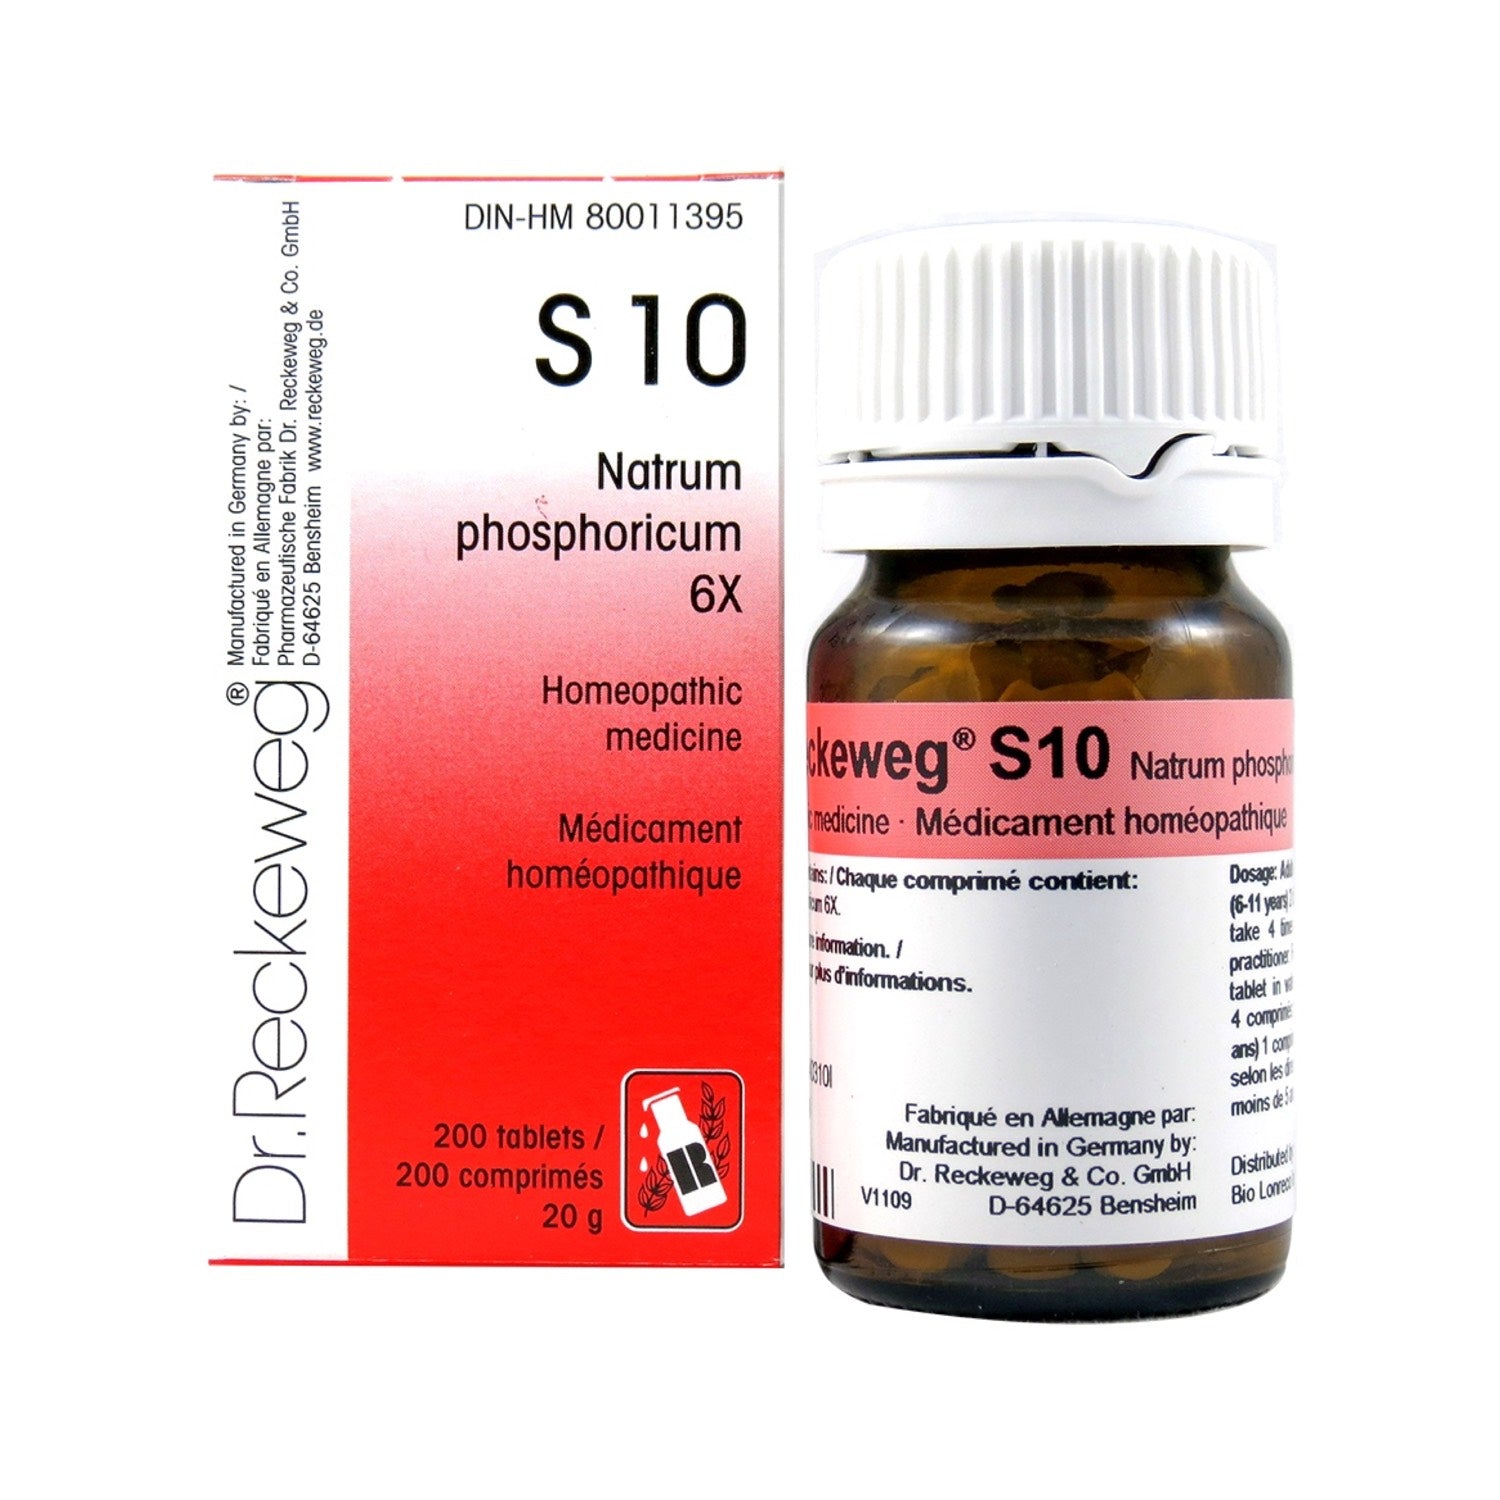 S10 Natrum phosphoricum, Schuessler salt 6X 200 tablets (20 g)